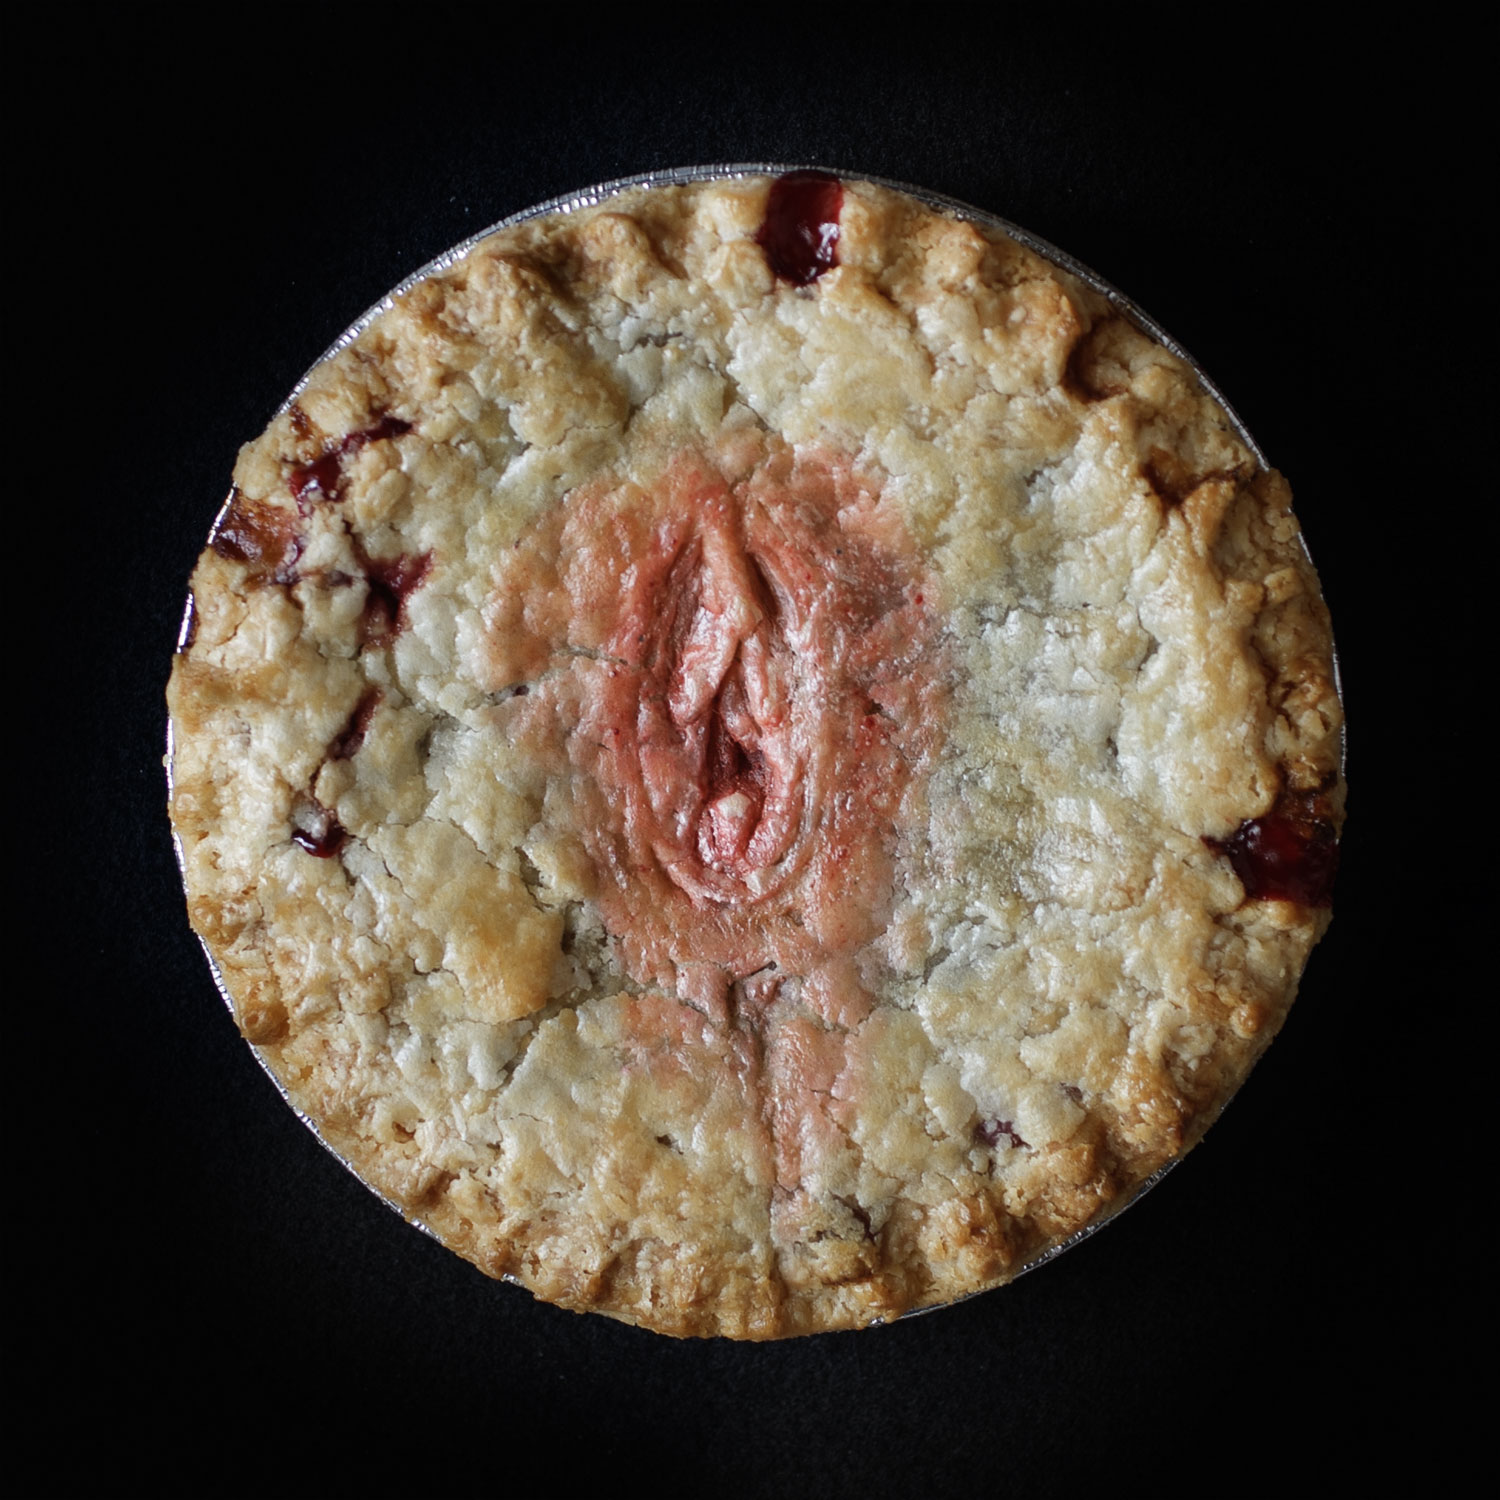 Hand made pie art that looks like a human vulva on a black background.